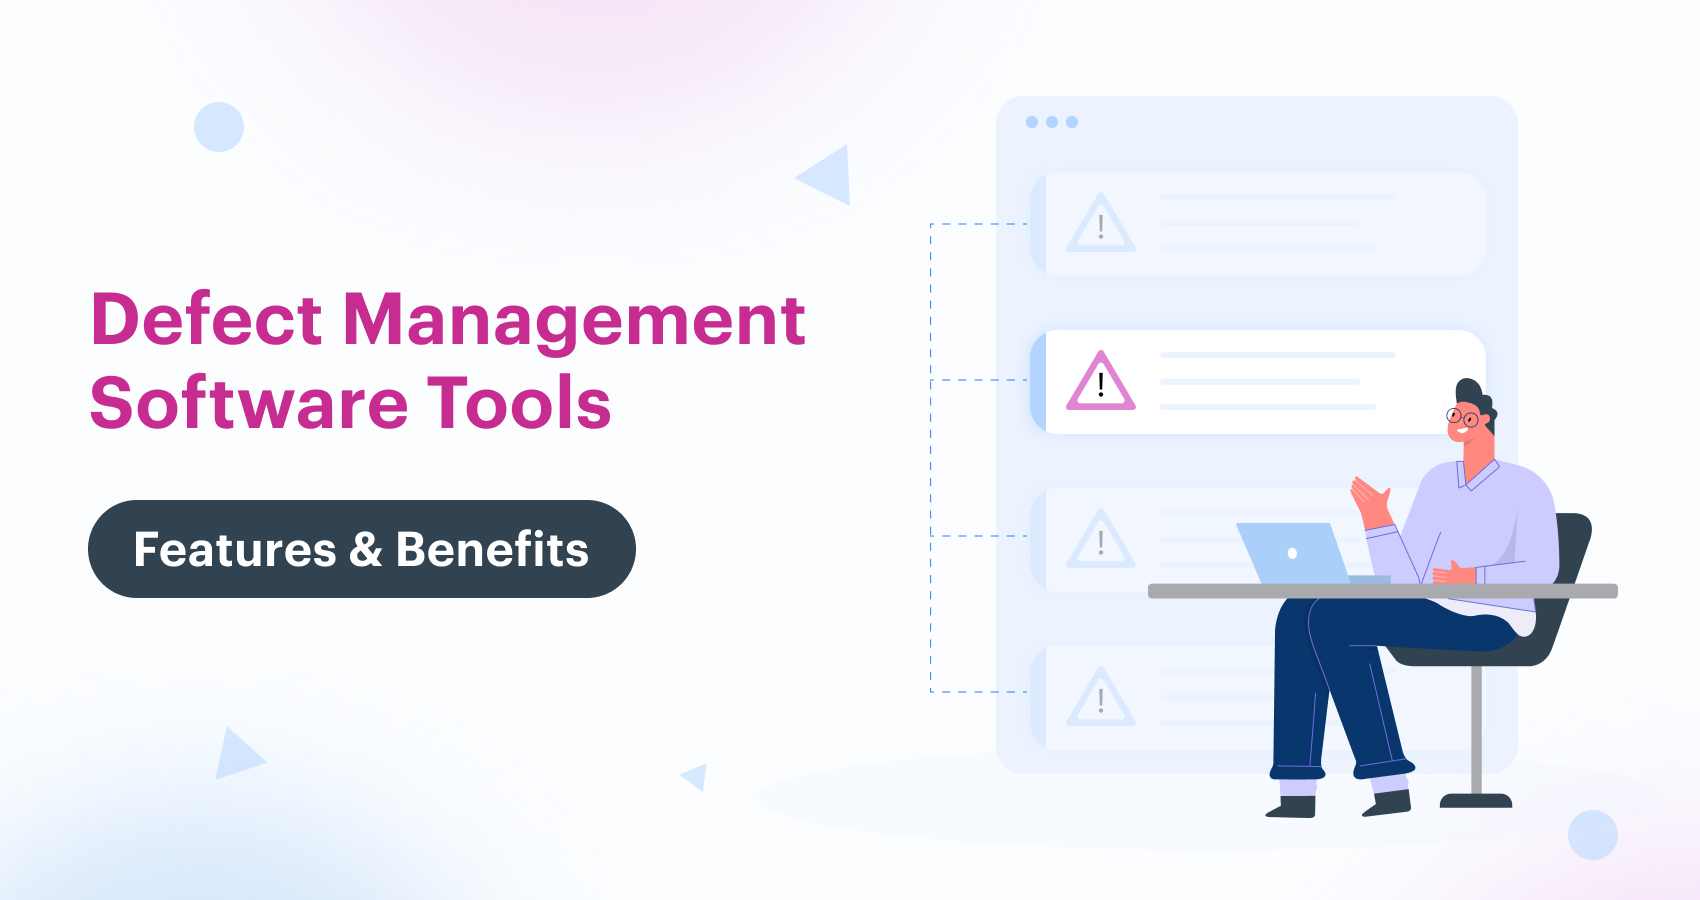 Defect Management Software Tools - Features & Benefits